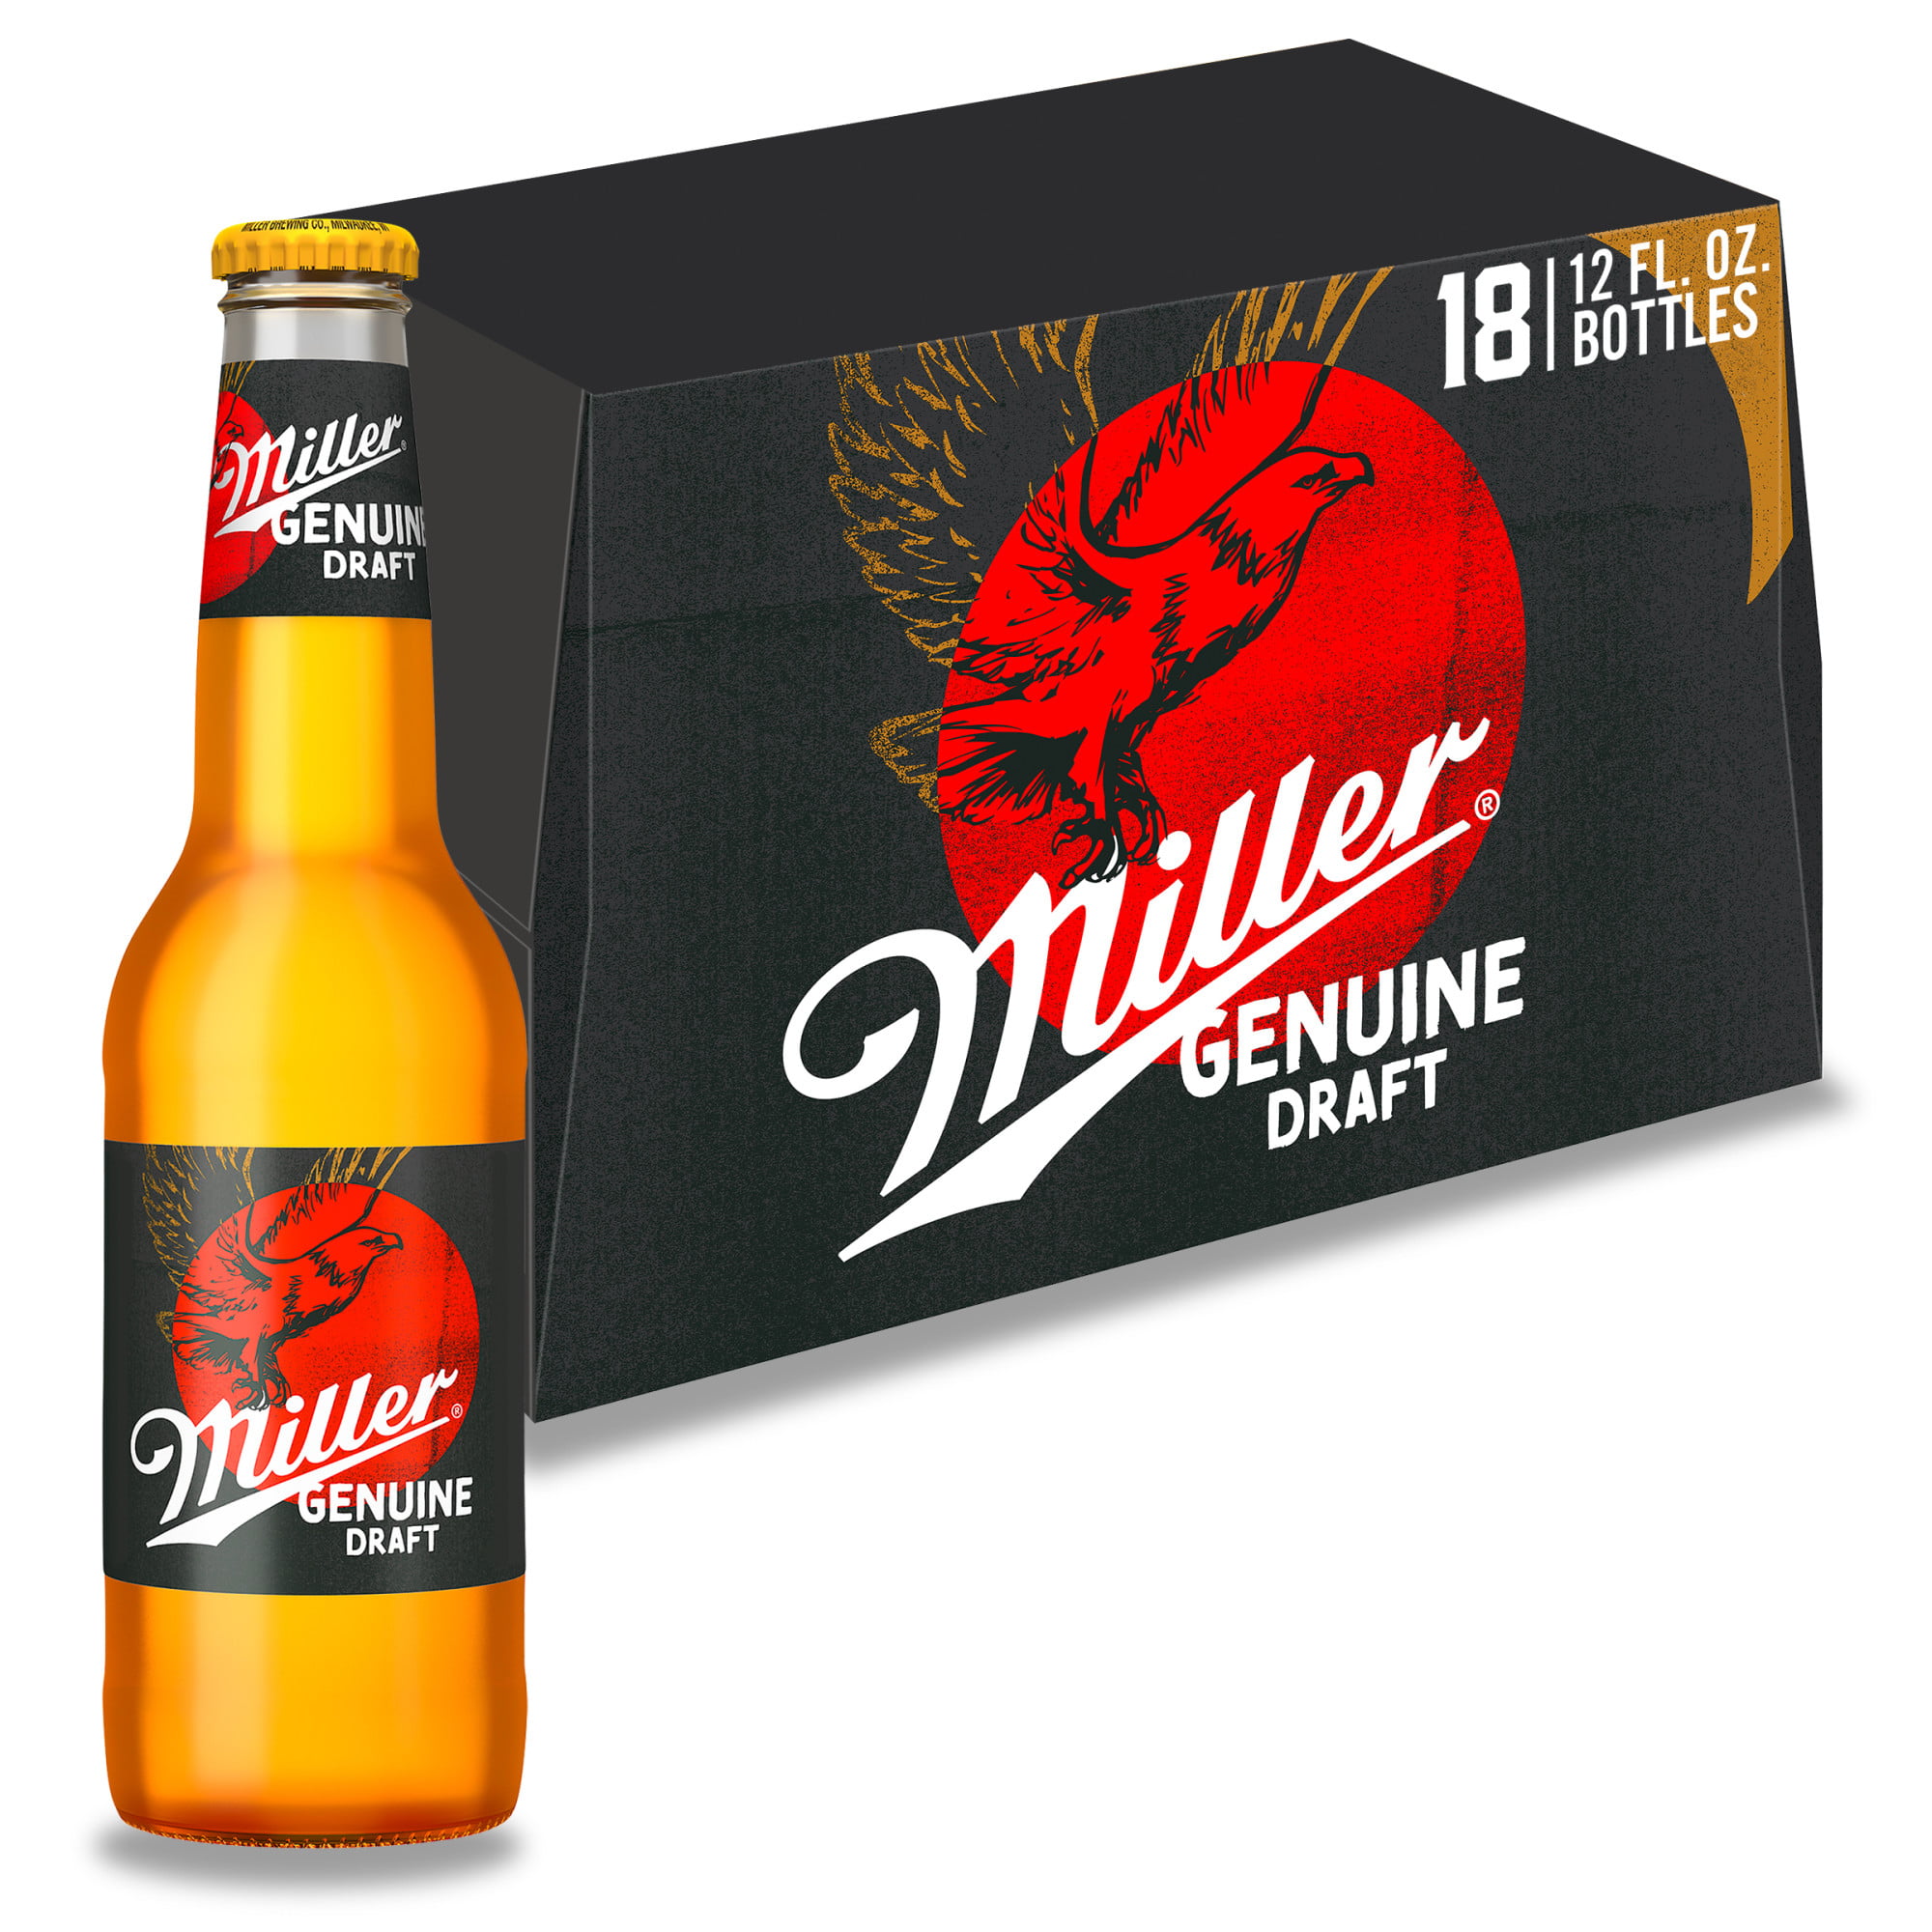 Миллер Дженьюин ДРАФТ. Miller Genuine Draft пиво. Miller пиво. Миллер стар